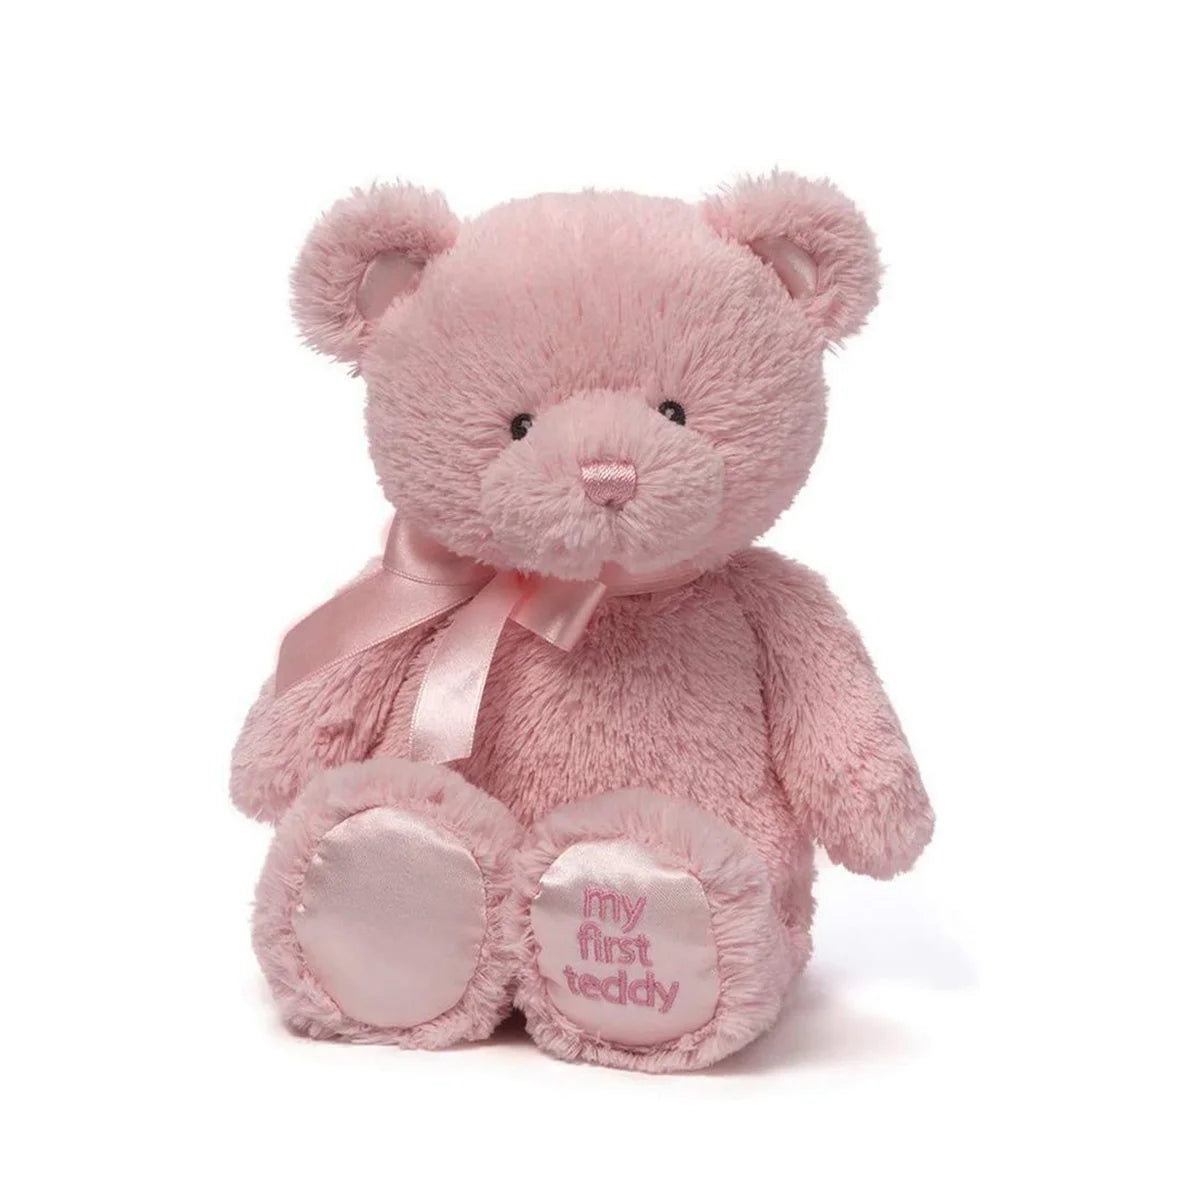 Gund Baby My 1st Teddy Plush Toy, Pink, 10-Inch - Stuffed Animals Heretoserveyou